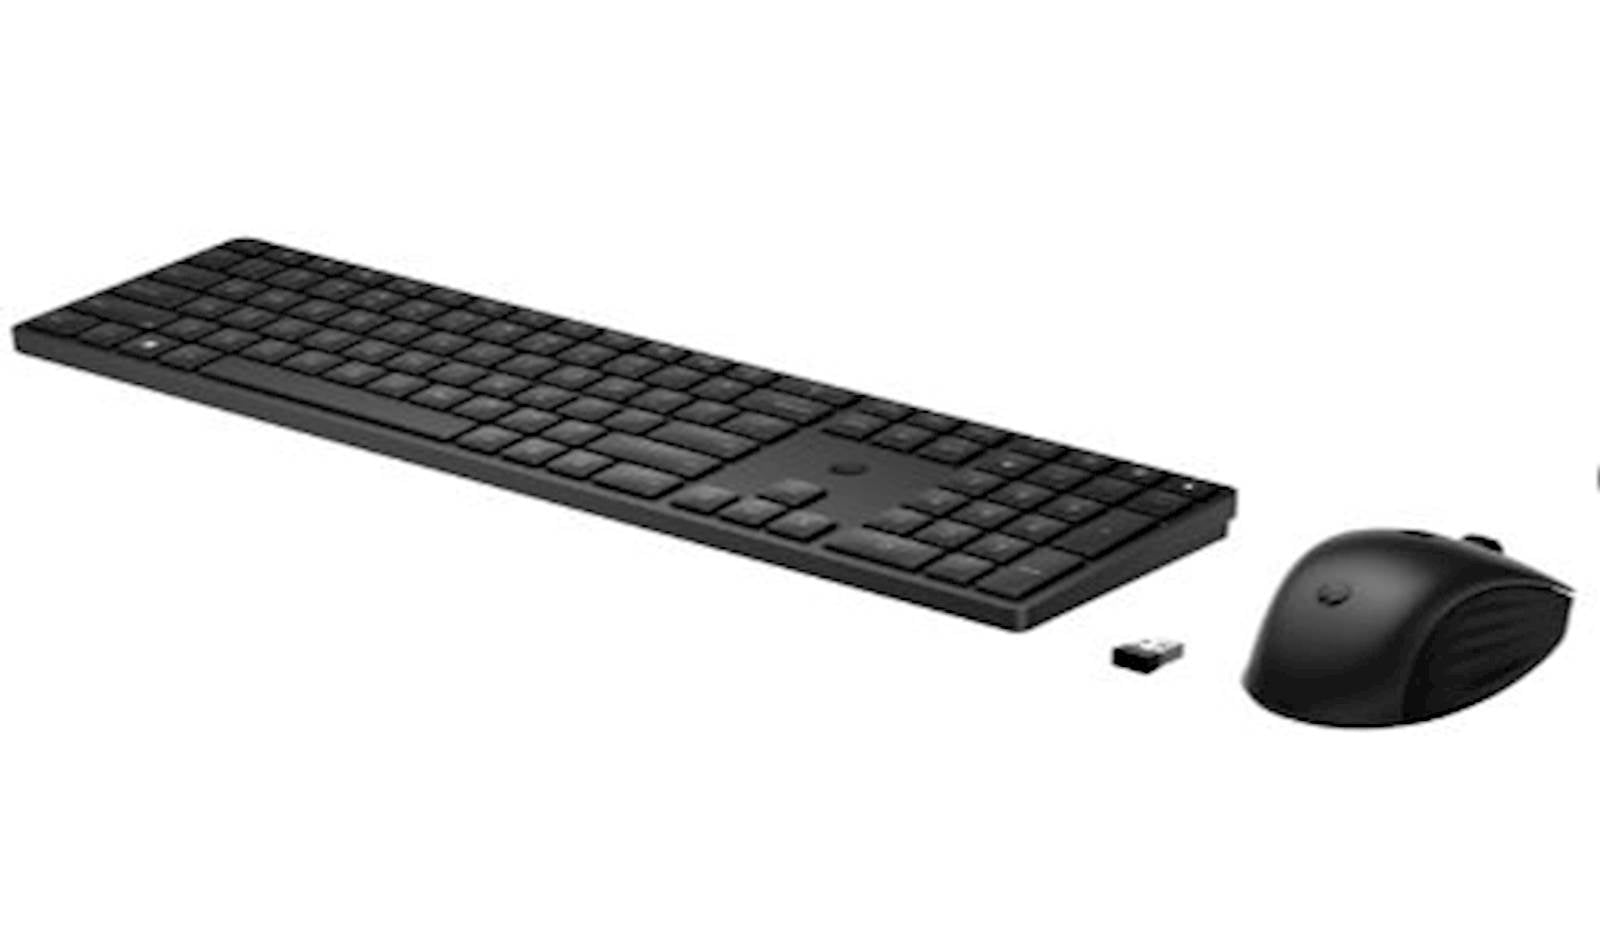 Tastatura s mišem HP 655 bežična 4R009AA